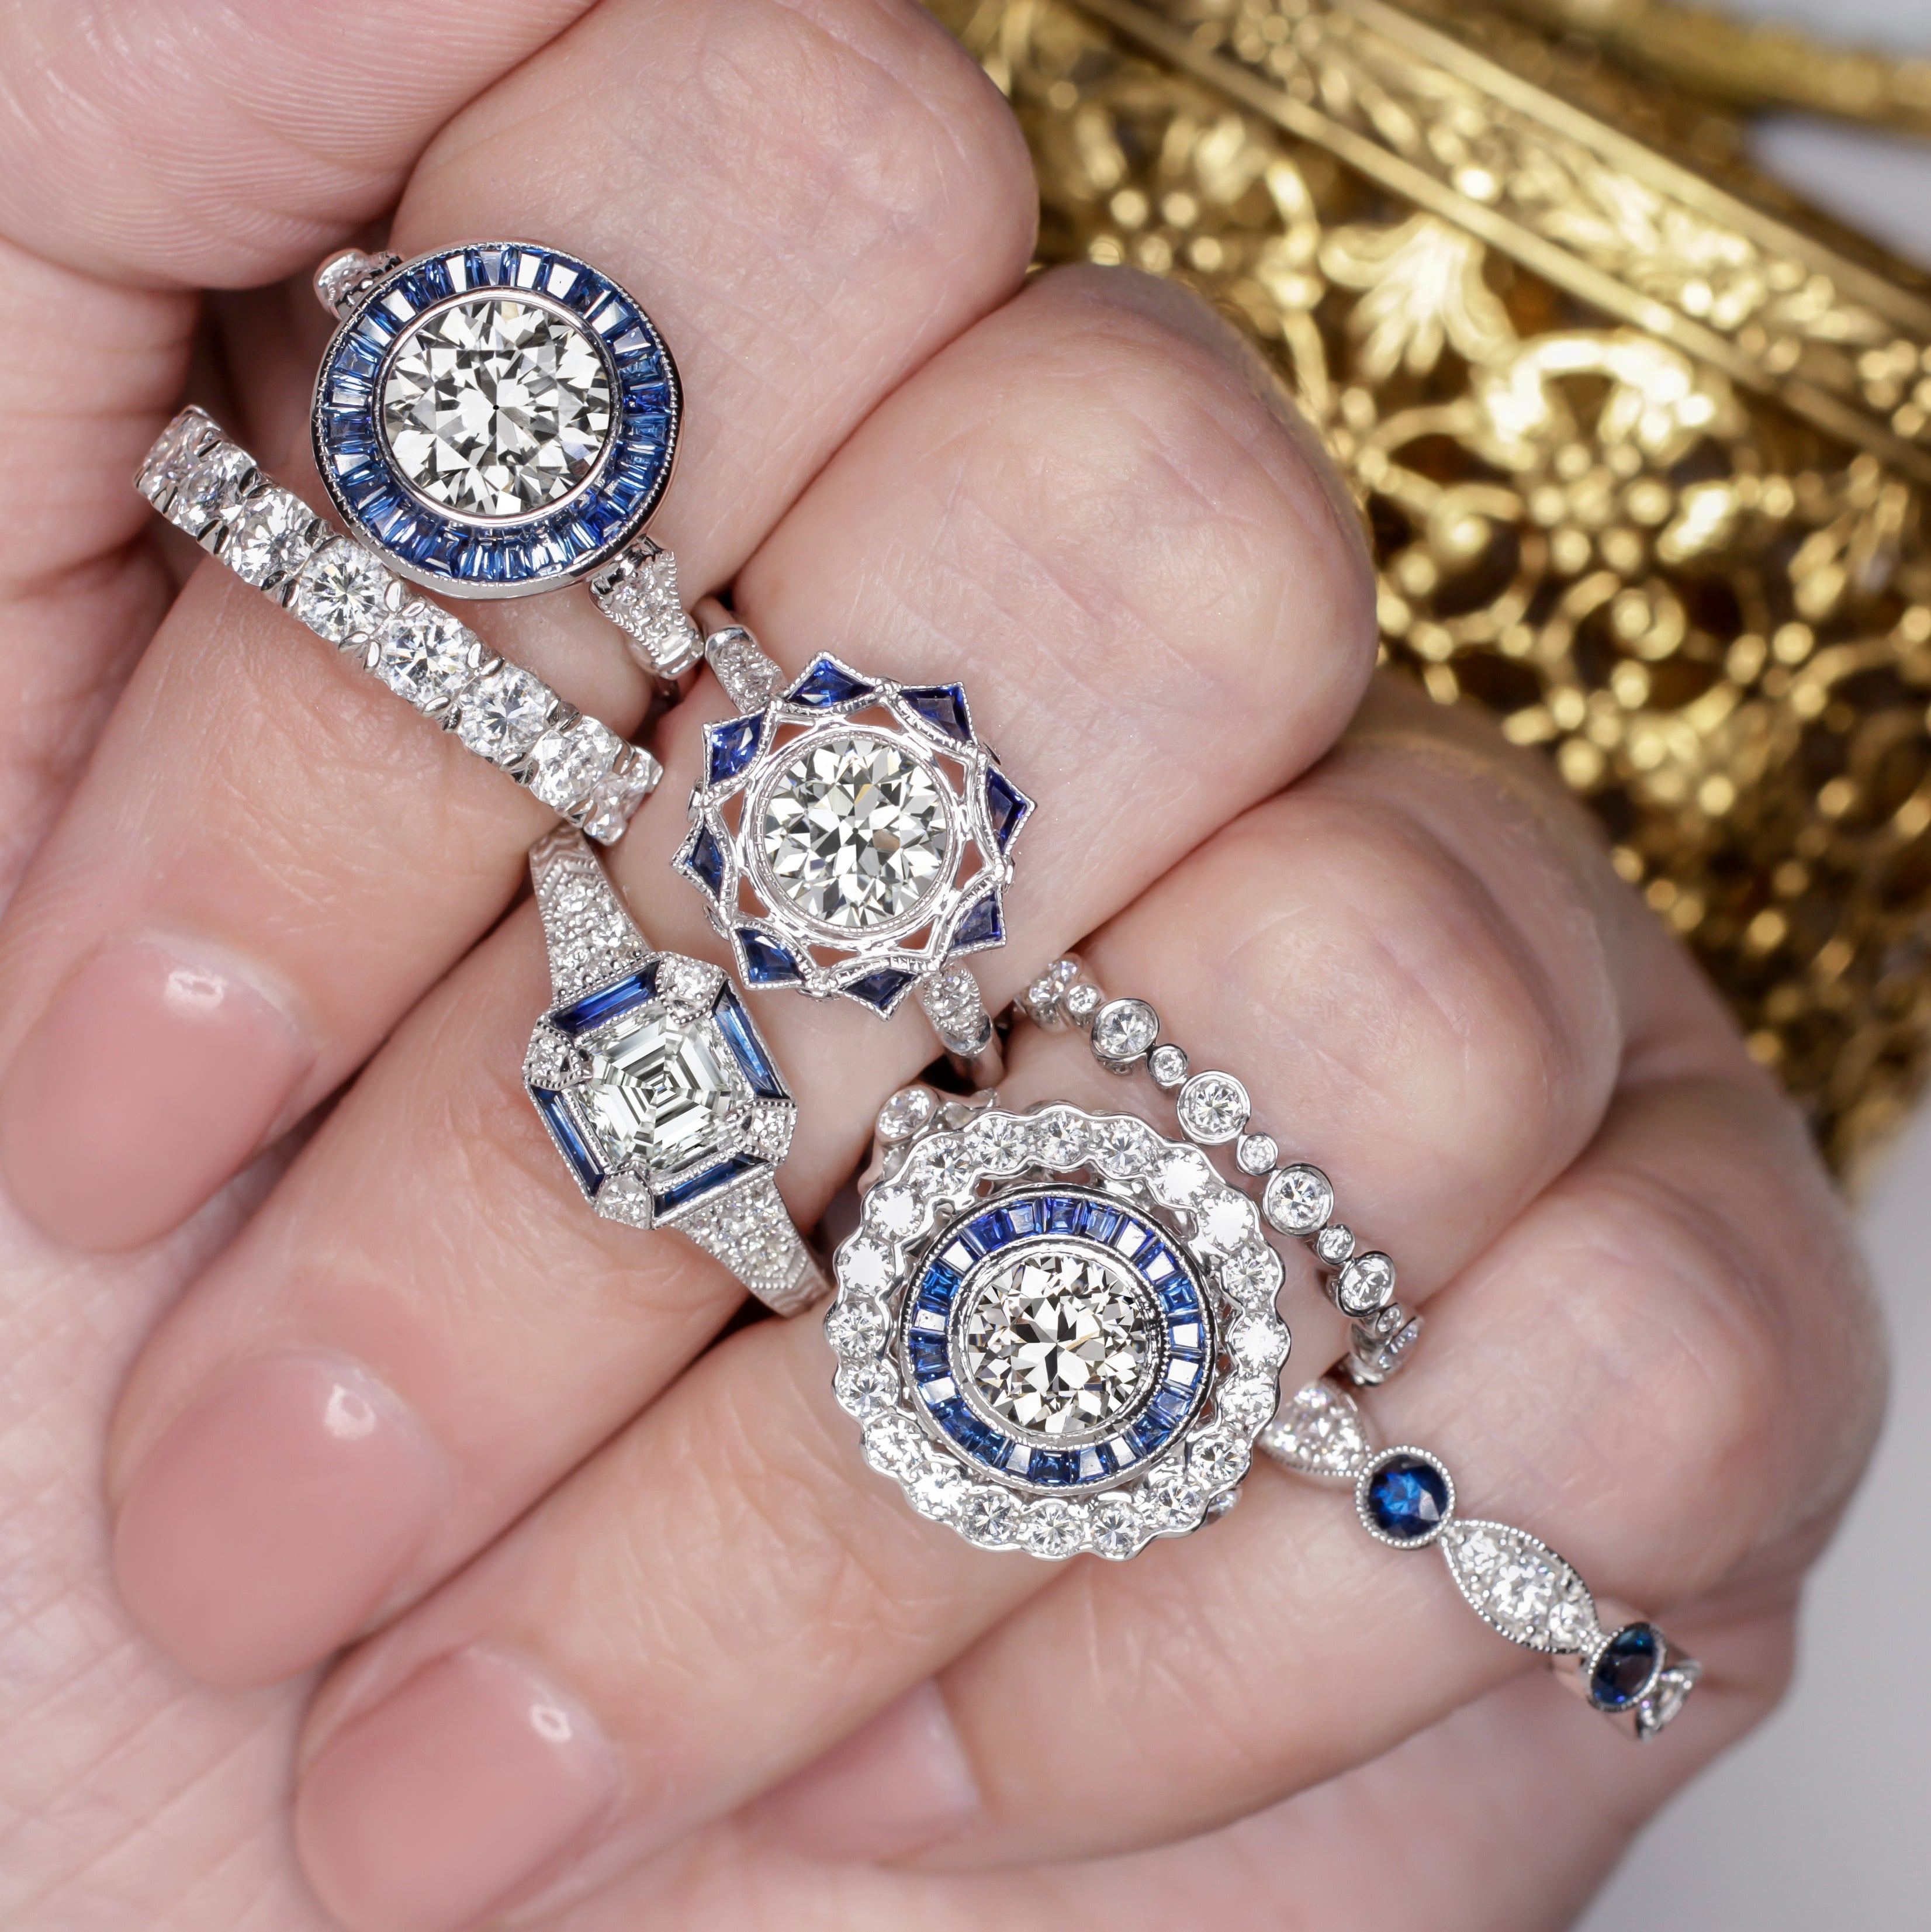 Art Deco Style Asscher Cut Diamond Engagement Ring with Baguette and Round  Diamonds | Asscher cut diamond engagement ring, Asscher cut ring, Baguette  engagement ring